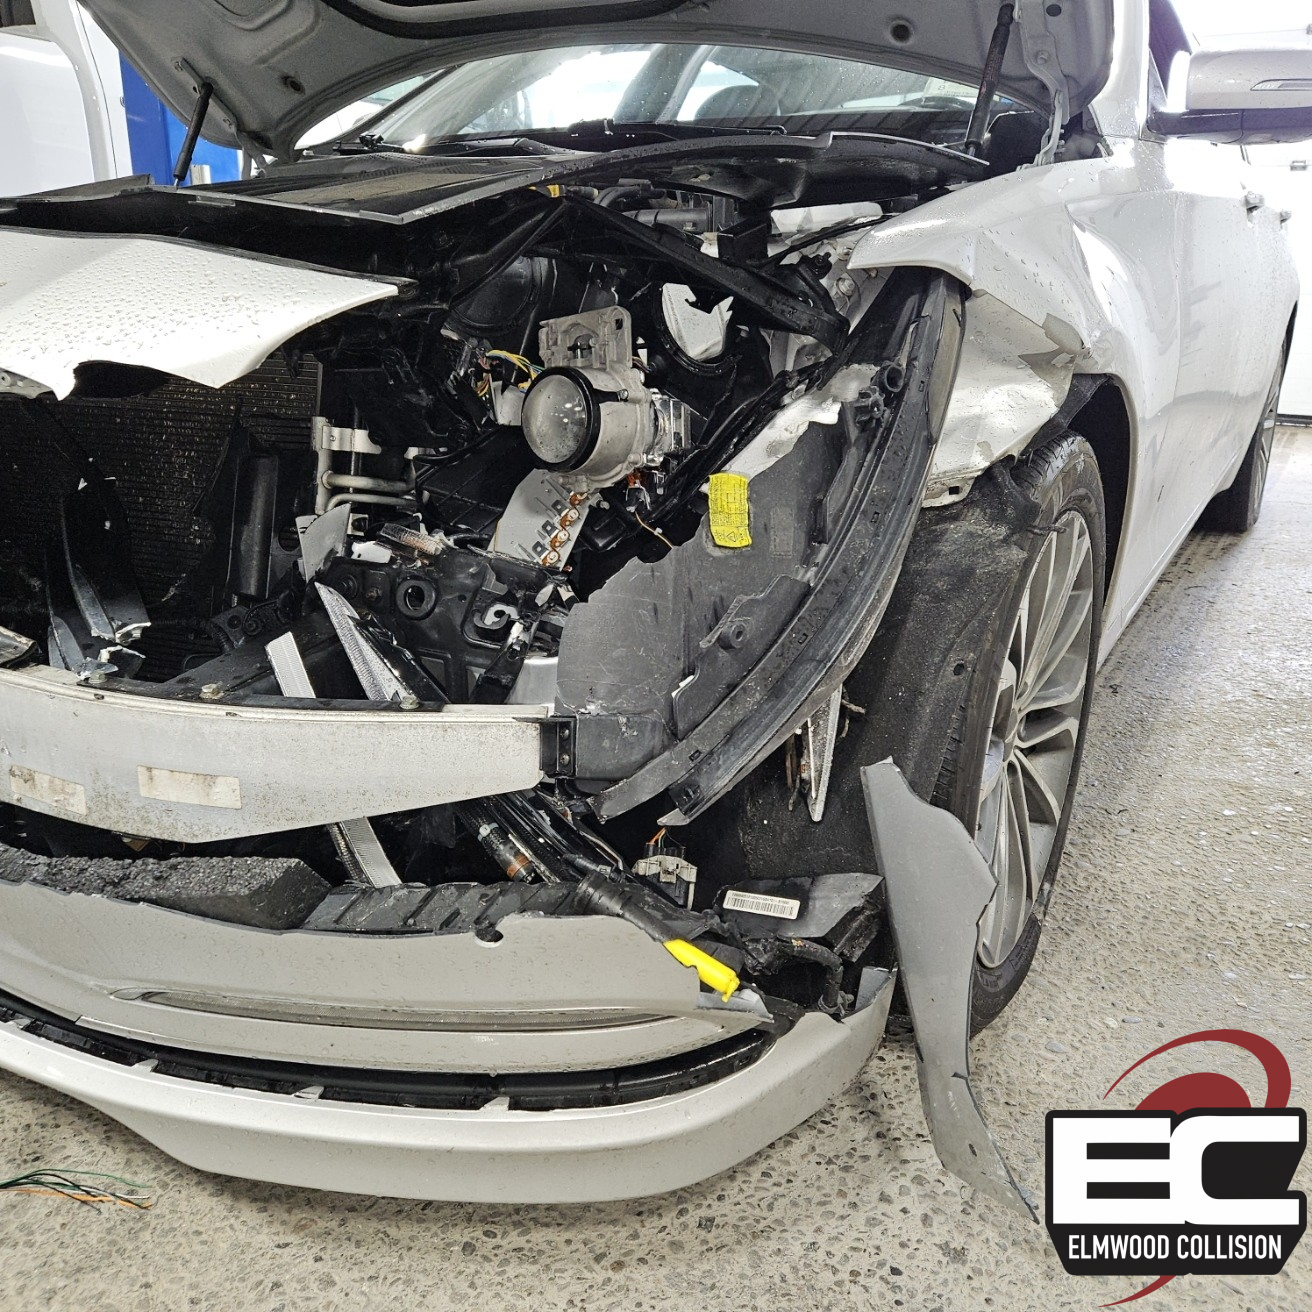 get your collision damage estimate at elmwood collision